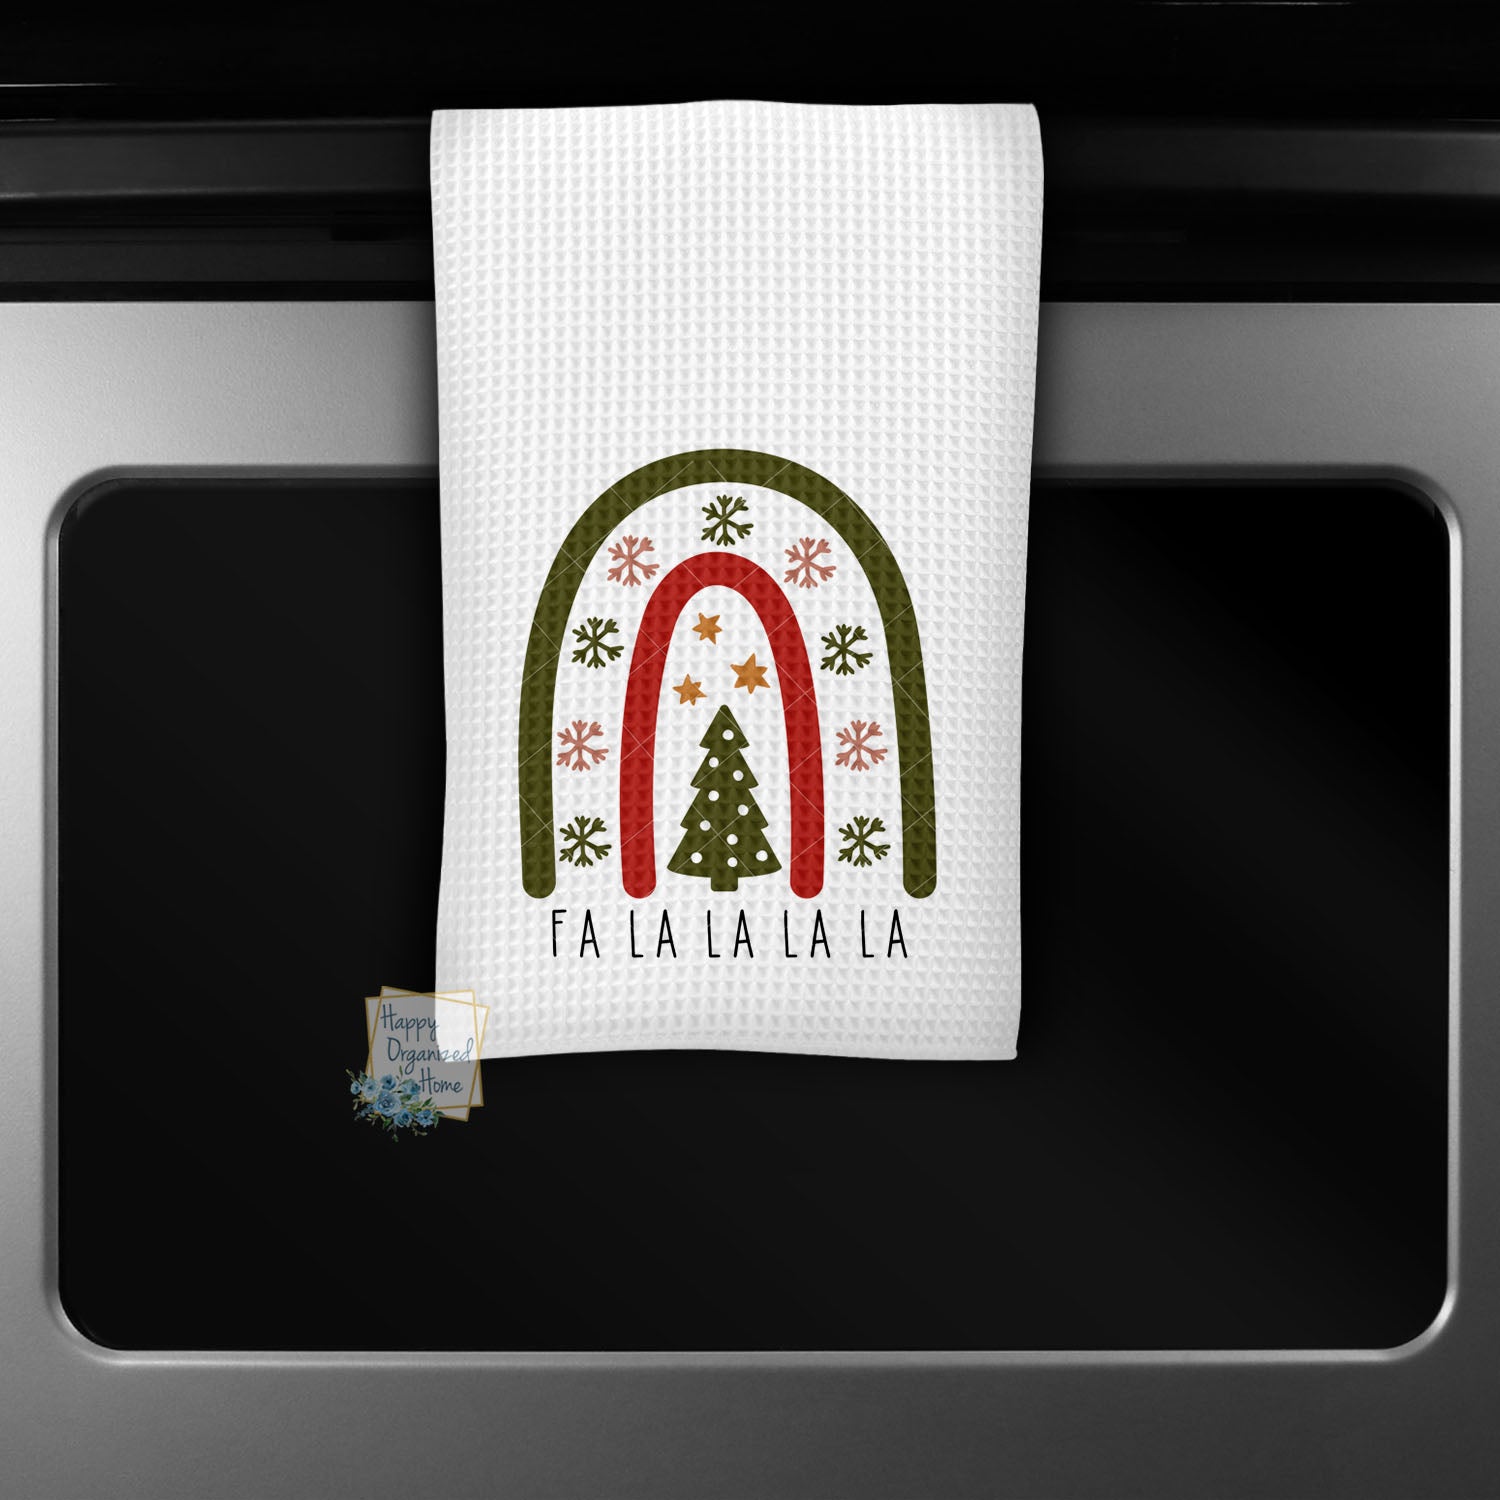 Fa La La La La Rainbow Retro style  - Kitchen Towel Tea towel Printed Kitchen Towel